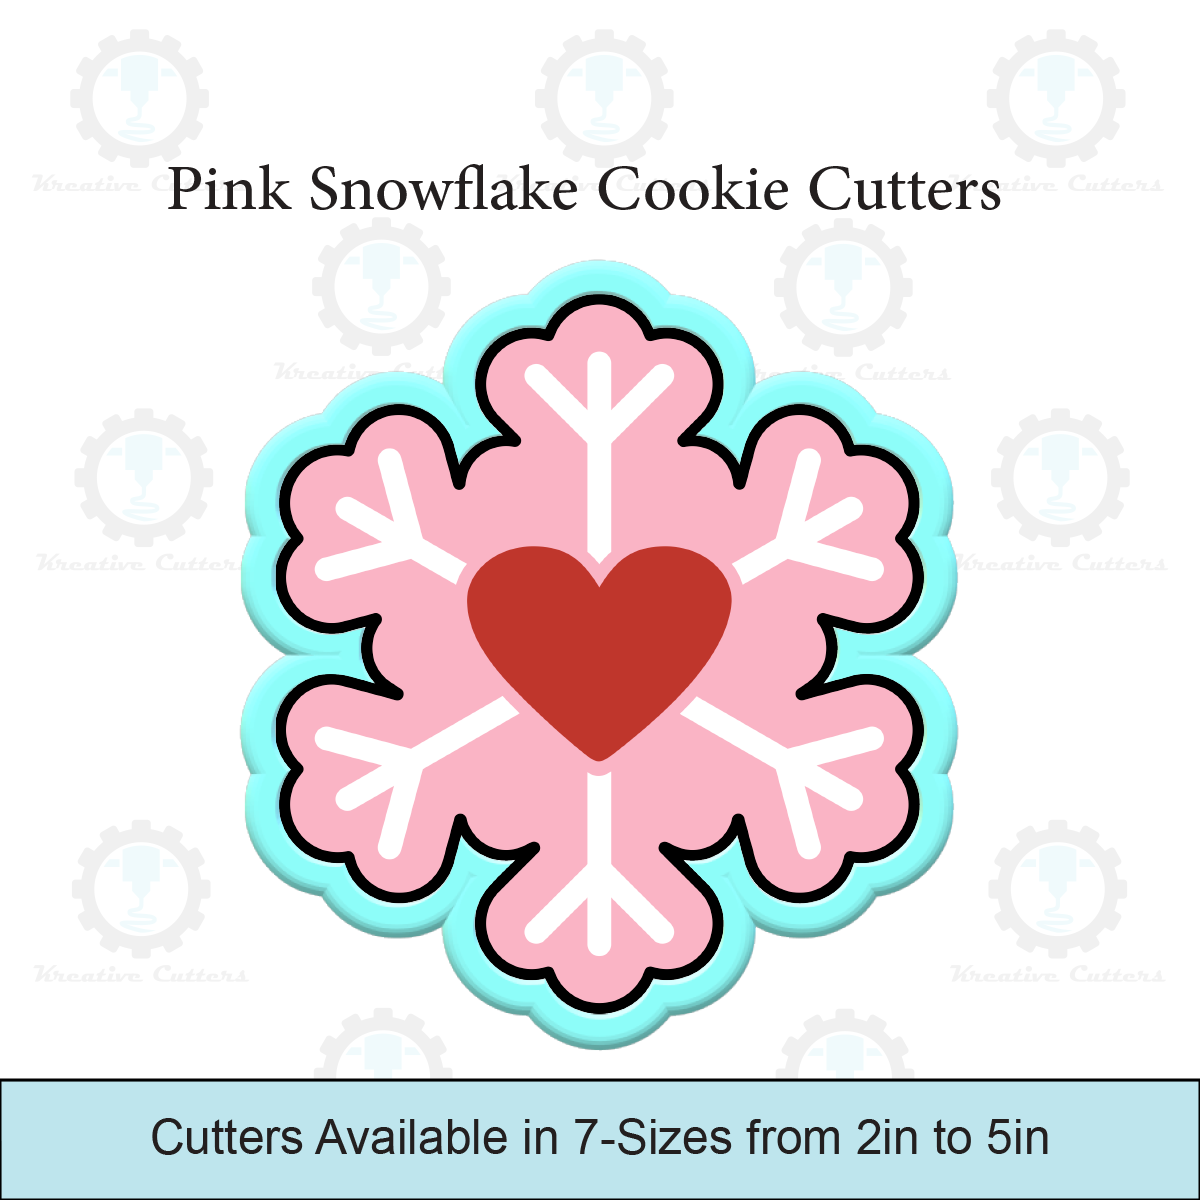 Pink Snowflake Cookie Cutters